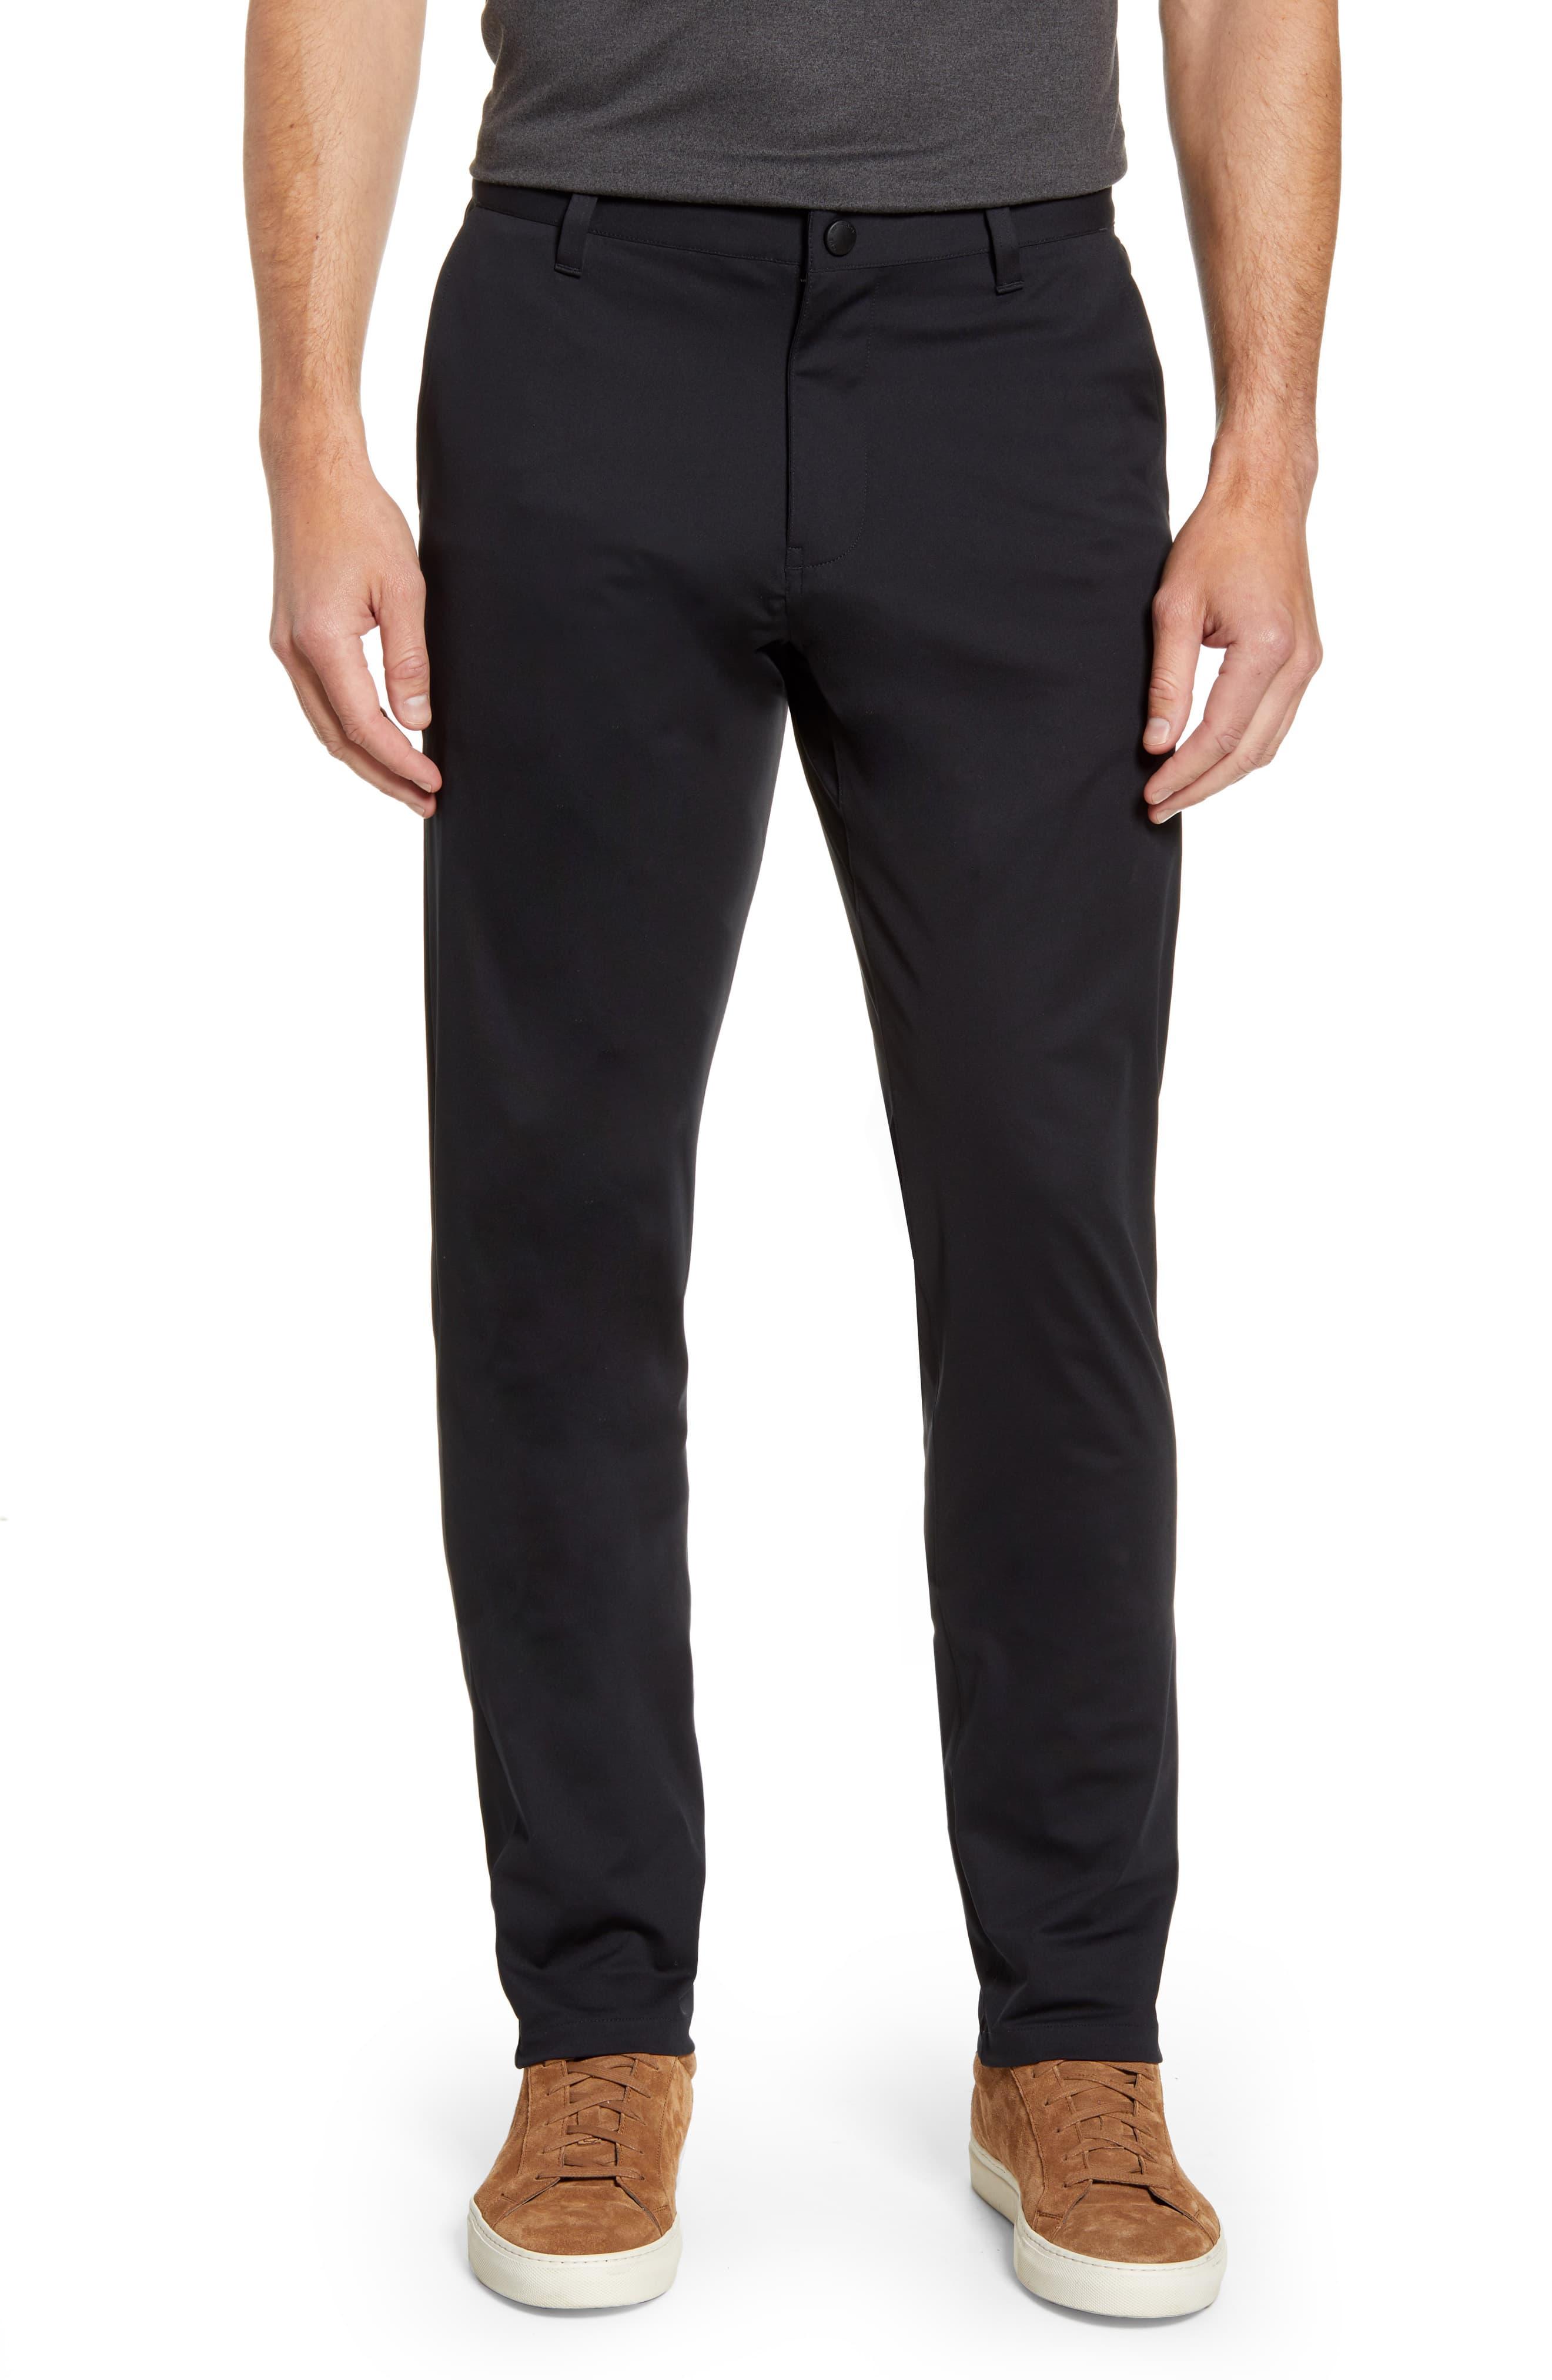 Rhone Commuter Slim Fit Pants in Black for Men - Save 38% - Lyst